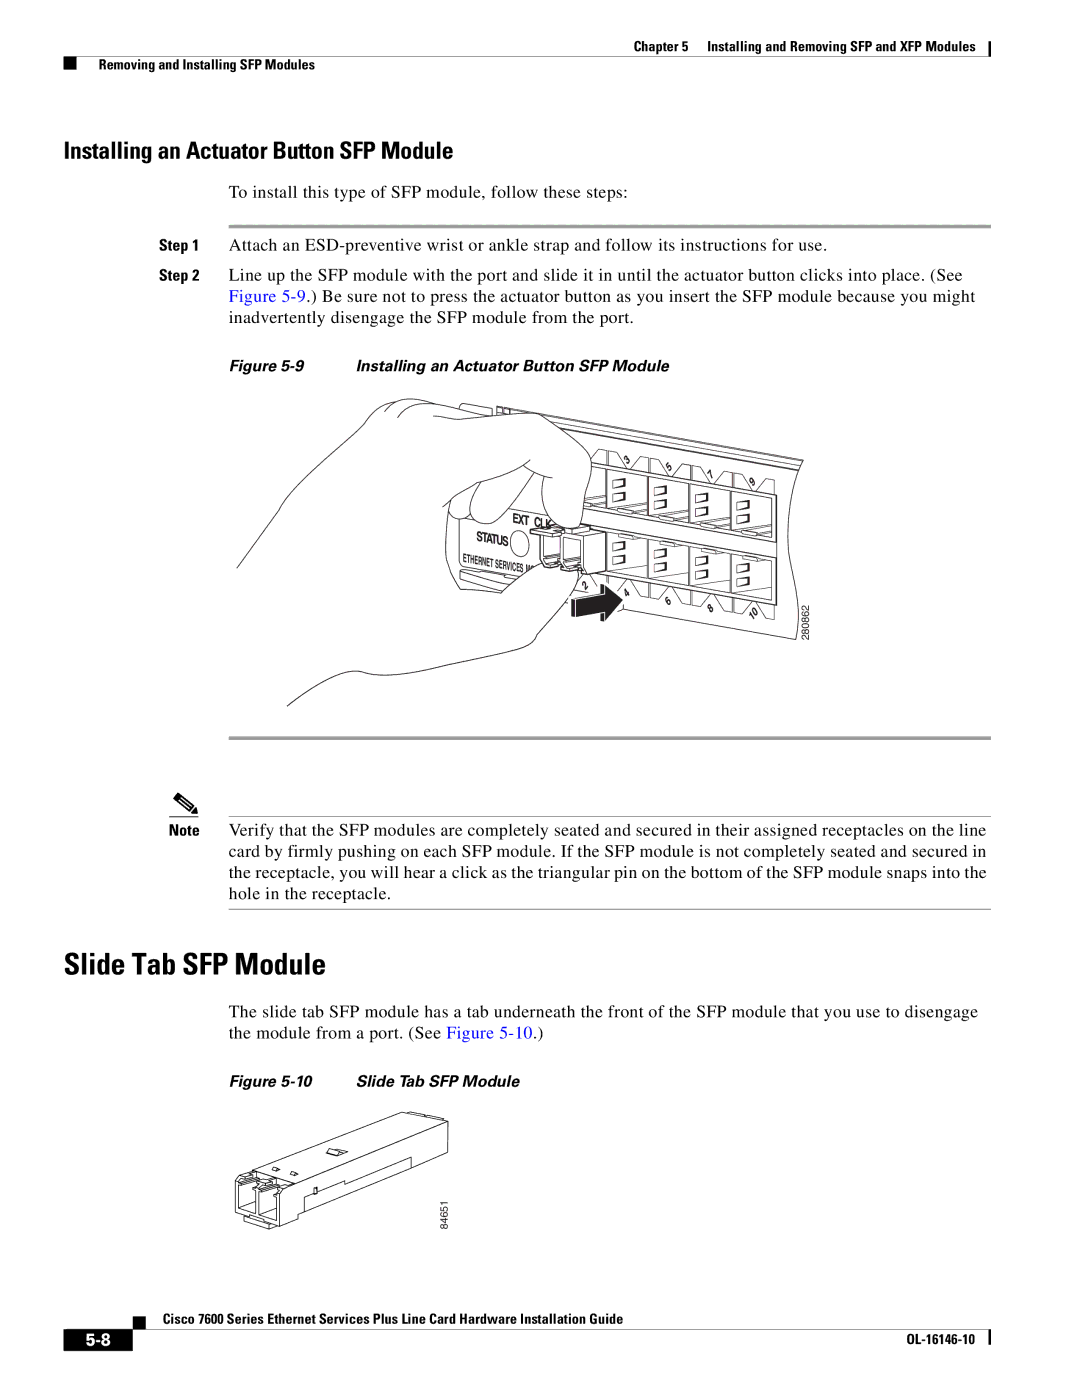 Cisco Systems OL-16146-10 manual Slide Tab SFP Module, Installing an Actuator Button SFP Module 